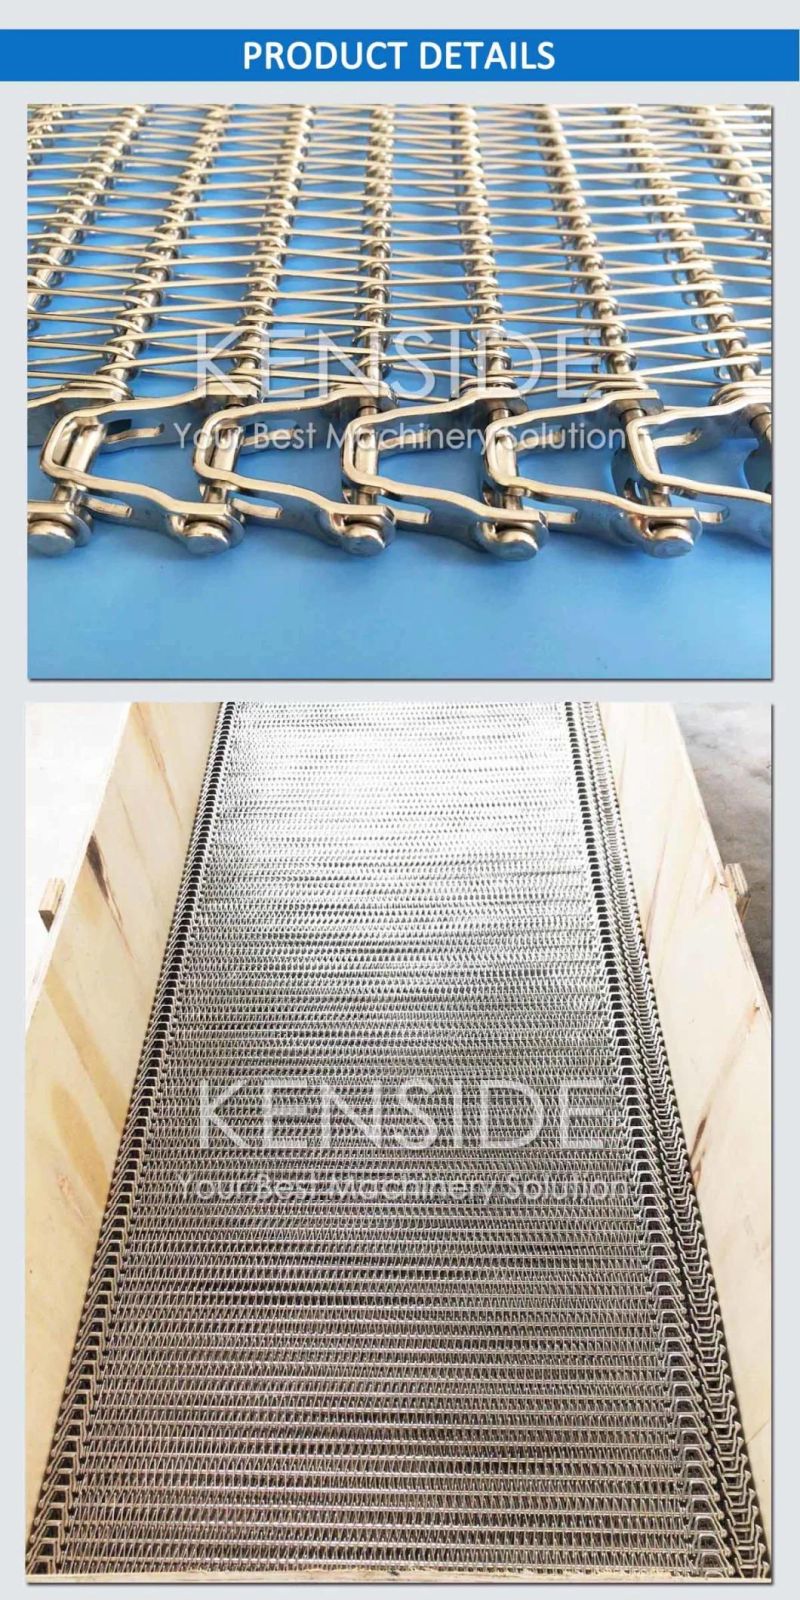 Space Saver Conveyor Belt Stainless Steel Belt for Bakery Cooling Lines